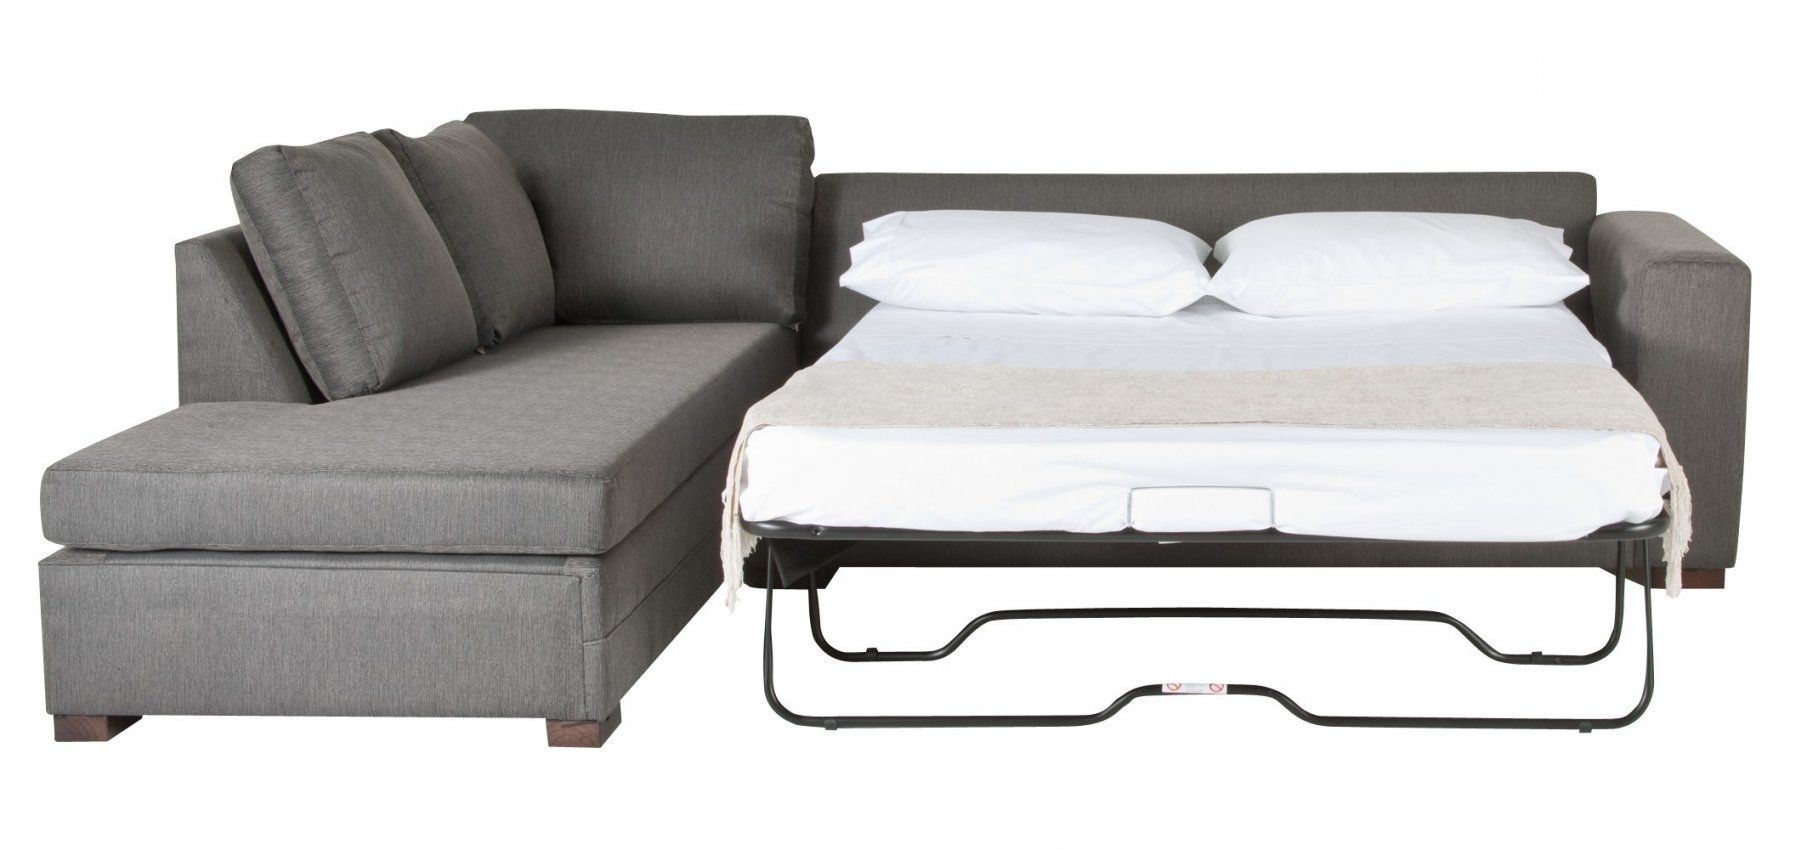 Sofa Design: Elegant L Shaped Sectional Sleeper Sofa L Inside Inside L Shaped Sectional Sleeper Sofas (View 3 of 10)